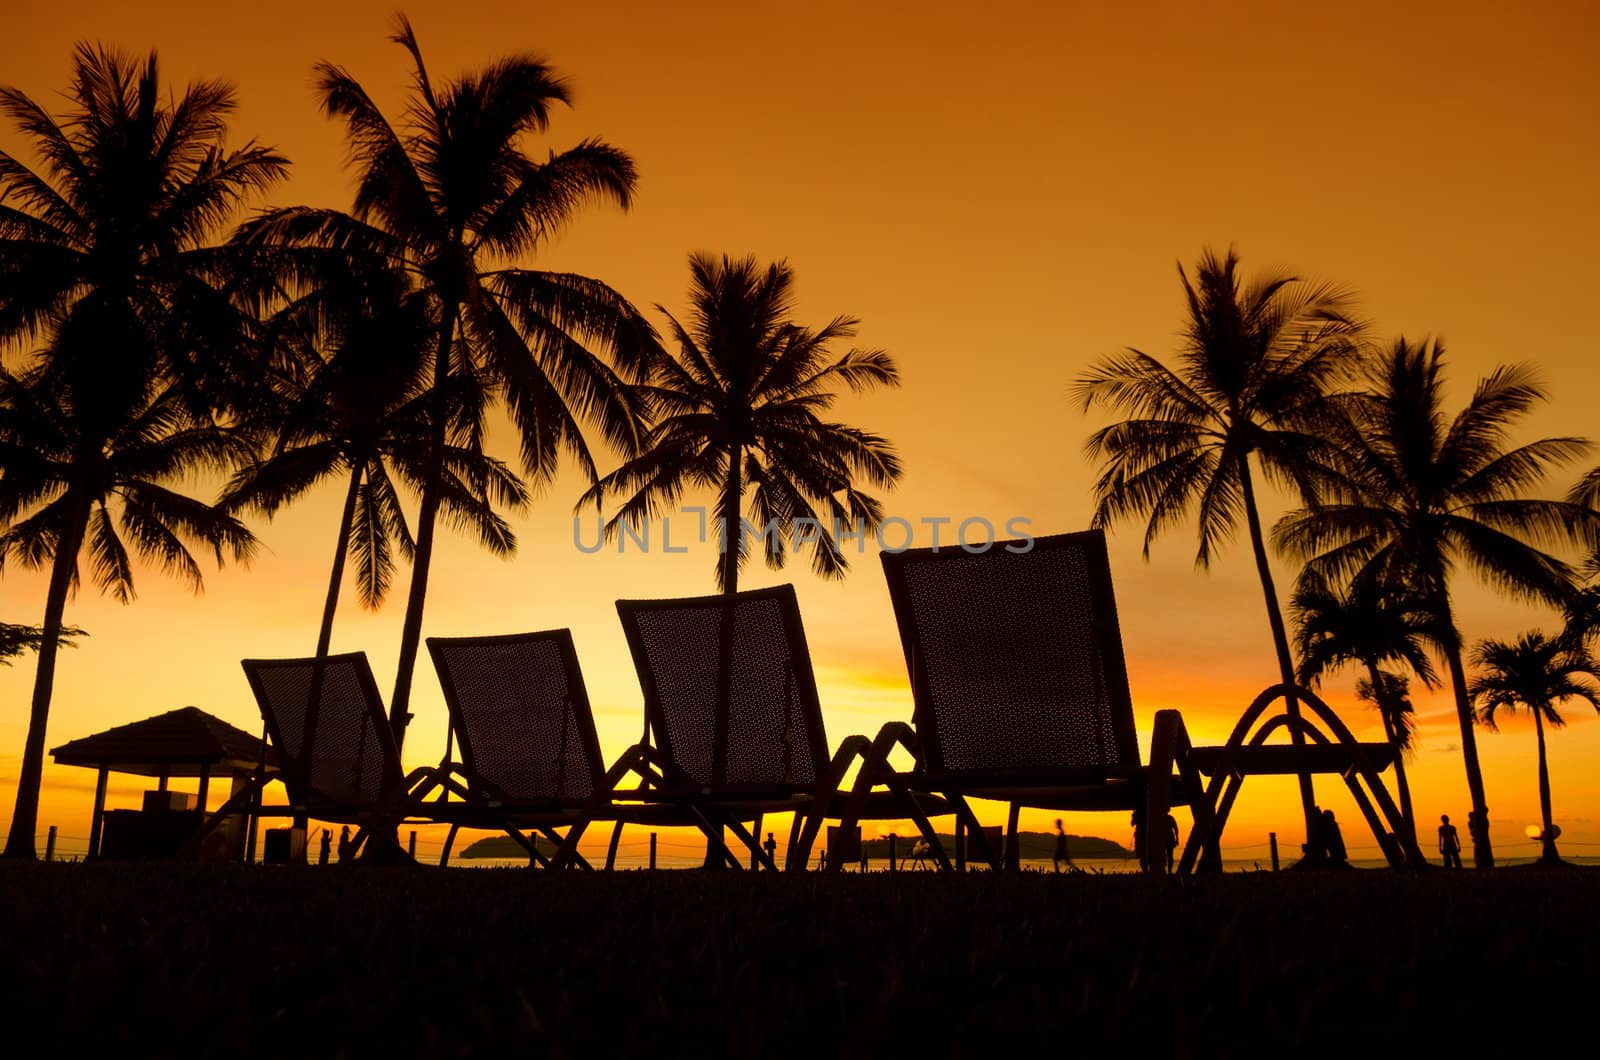 Row deckchairs on beach at sunset, Tanjung Aru, Malaysia.